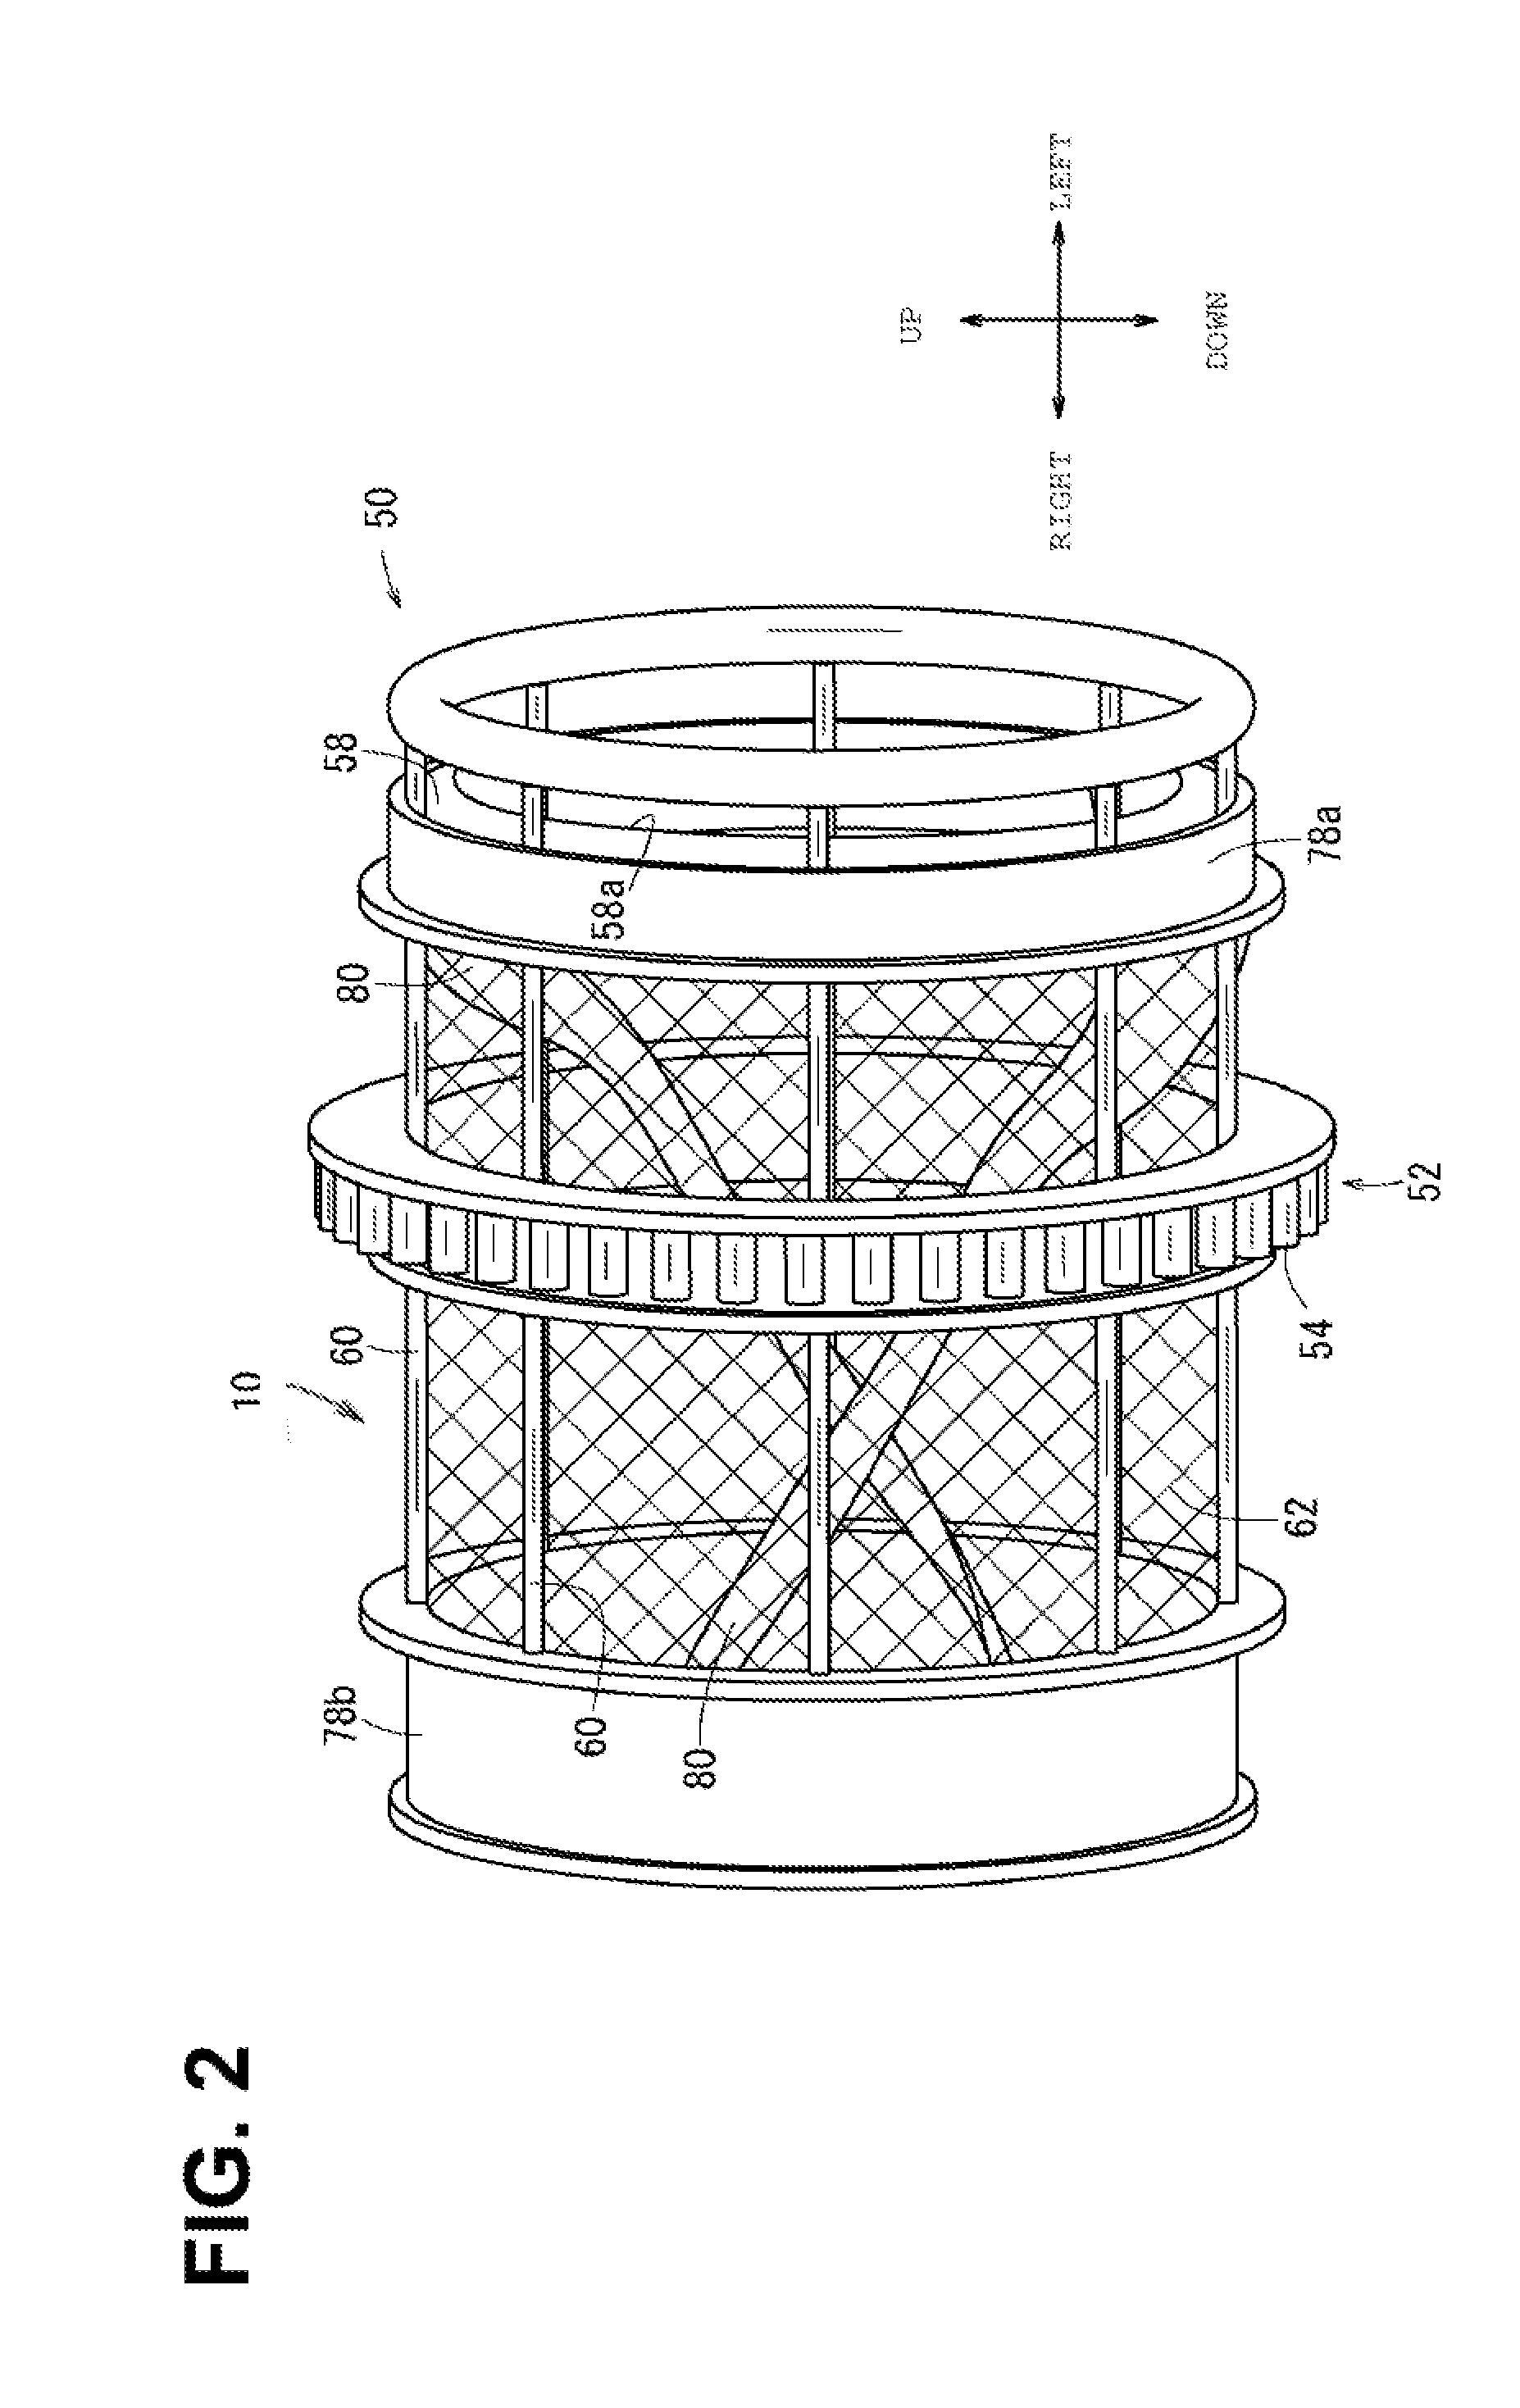 Rotary drum type litter separating apparatus